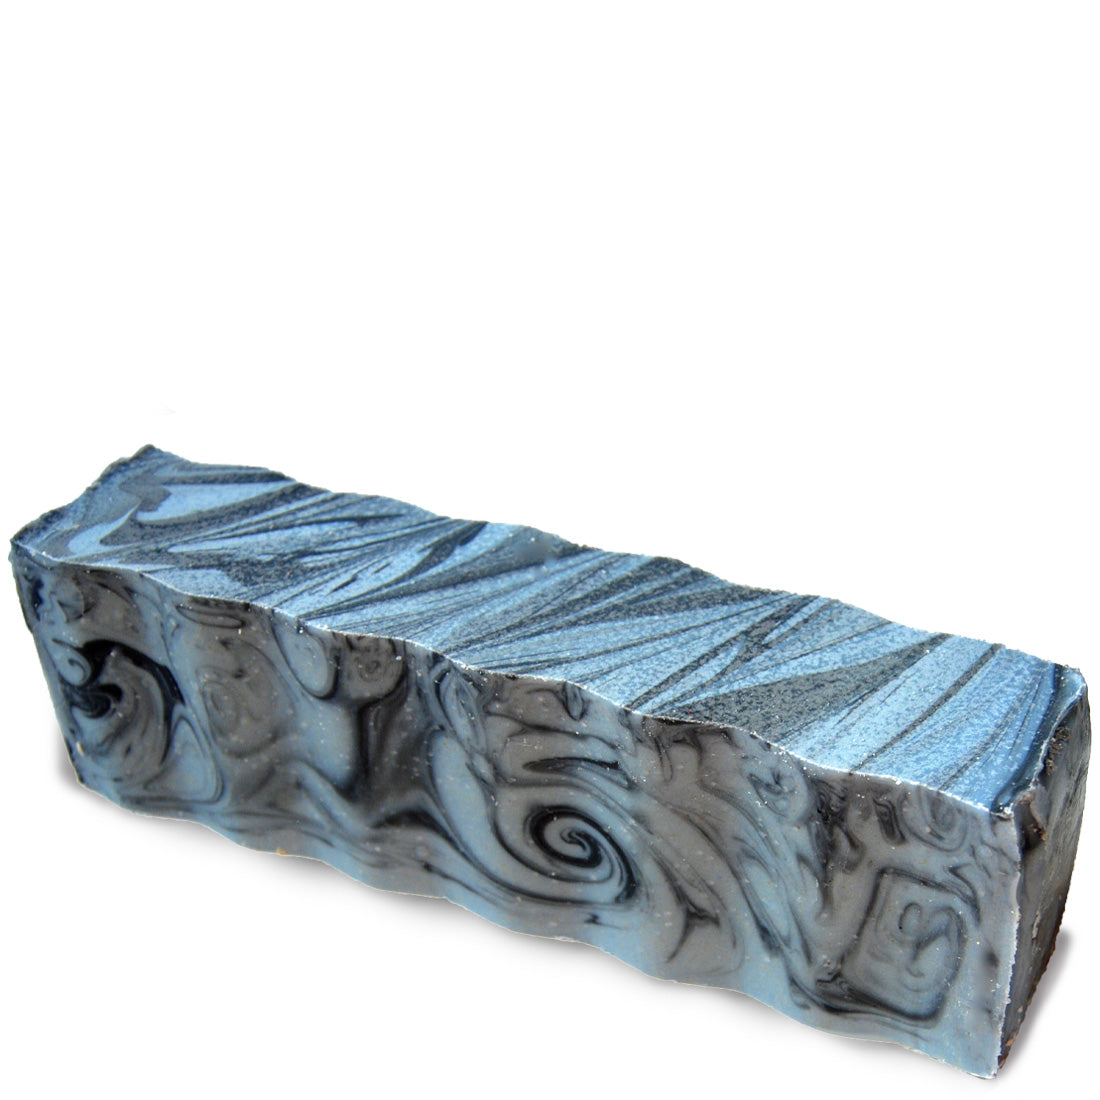 Blue and black wavy rectangular 45 ounce brick of eucalyptus scented Zum Bar Soap